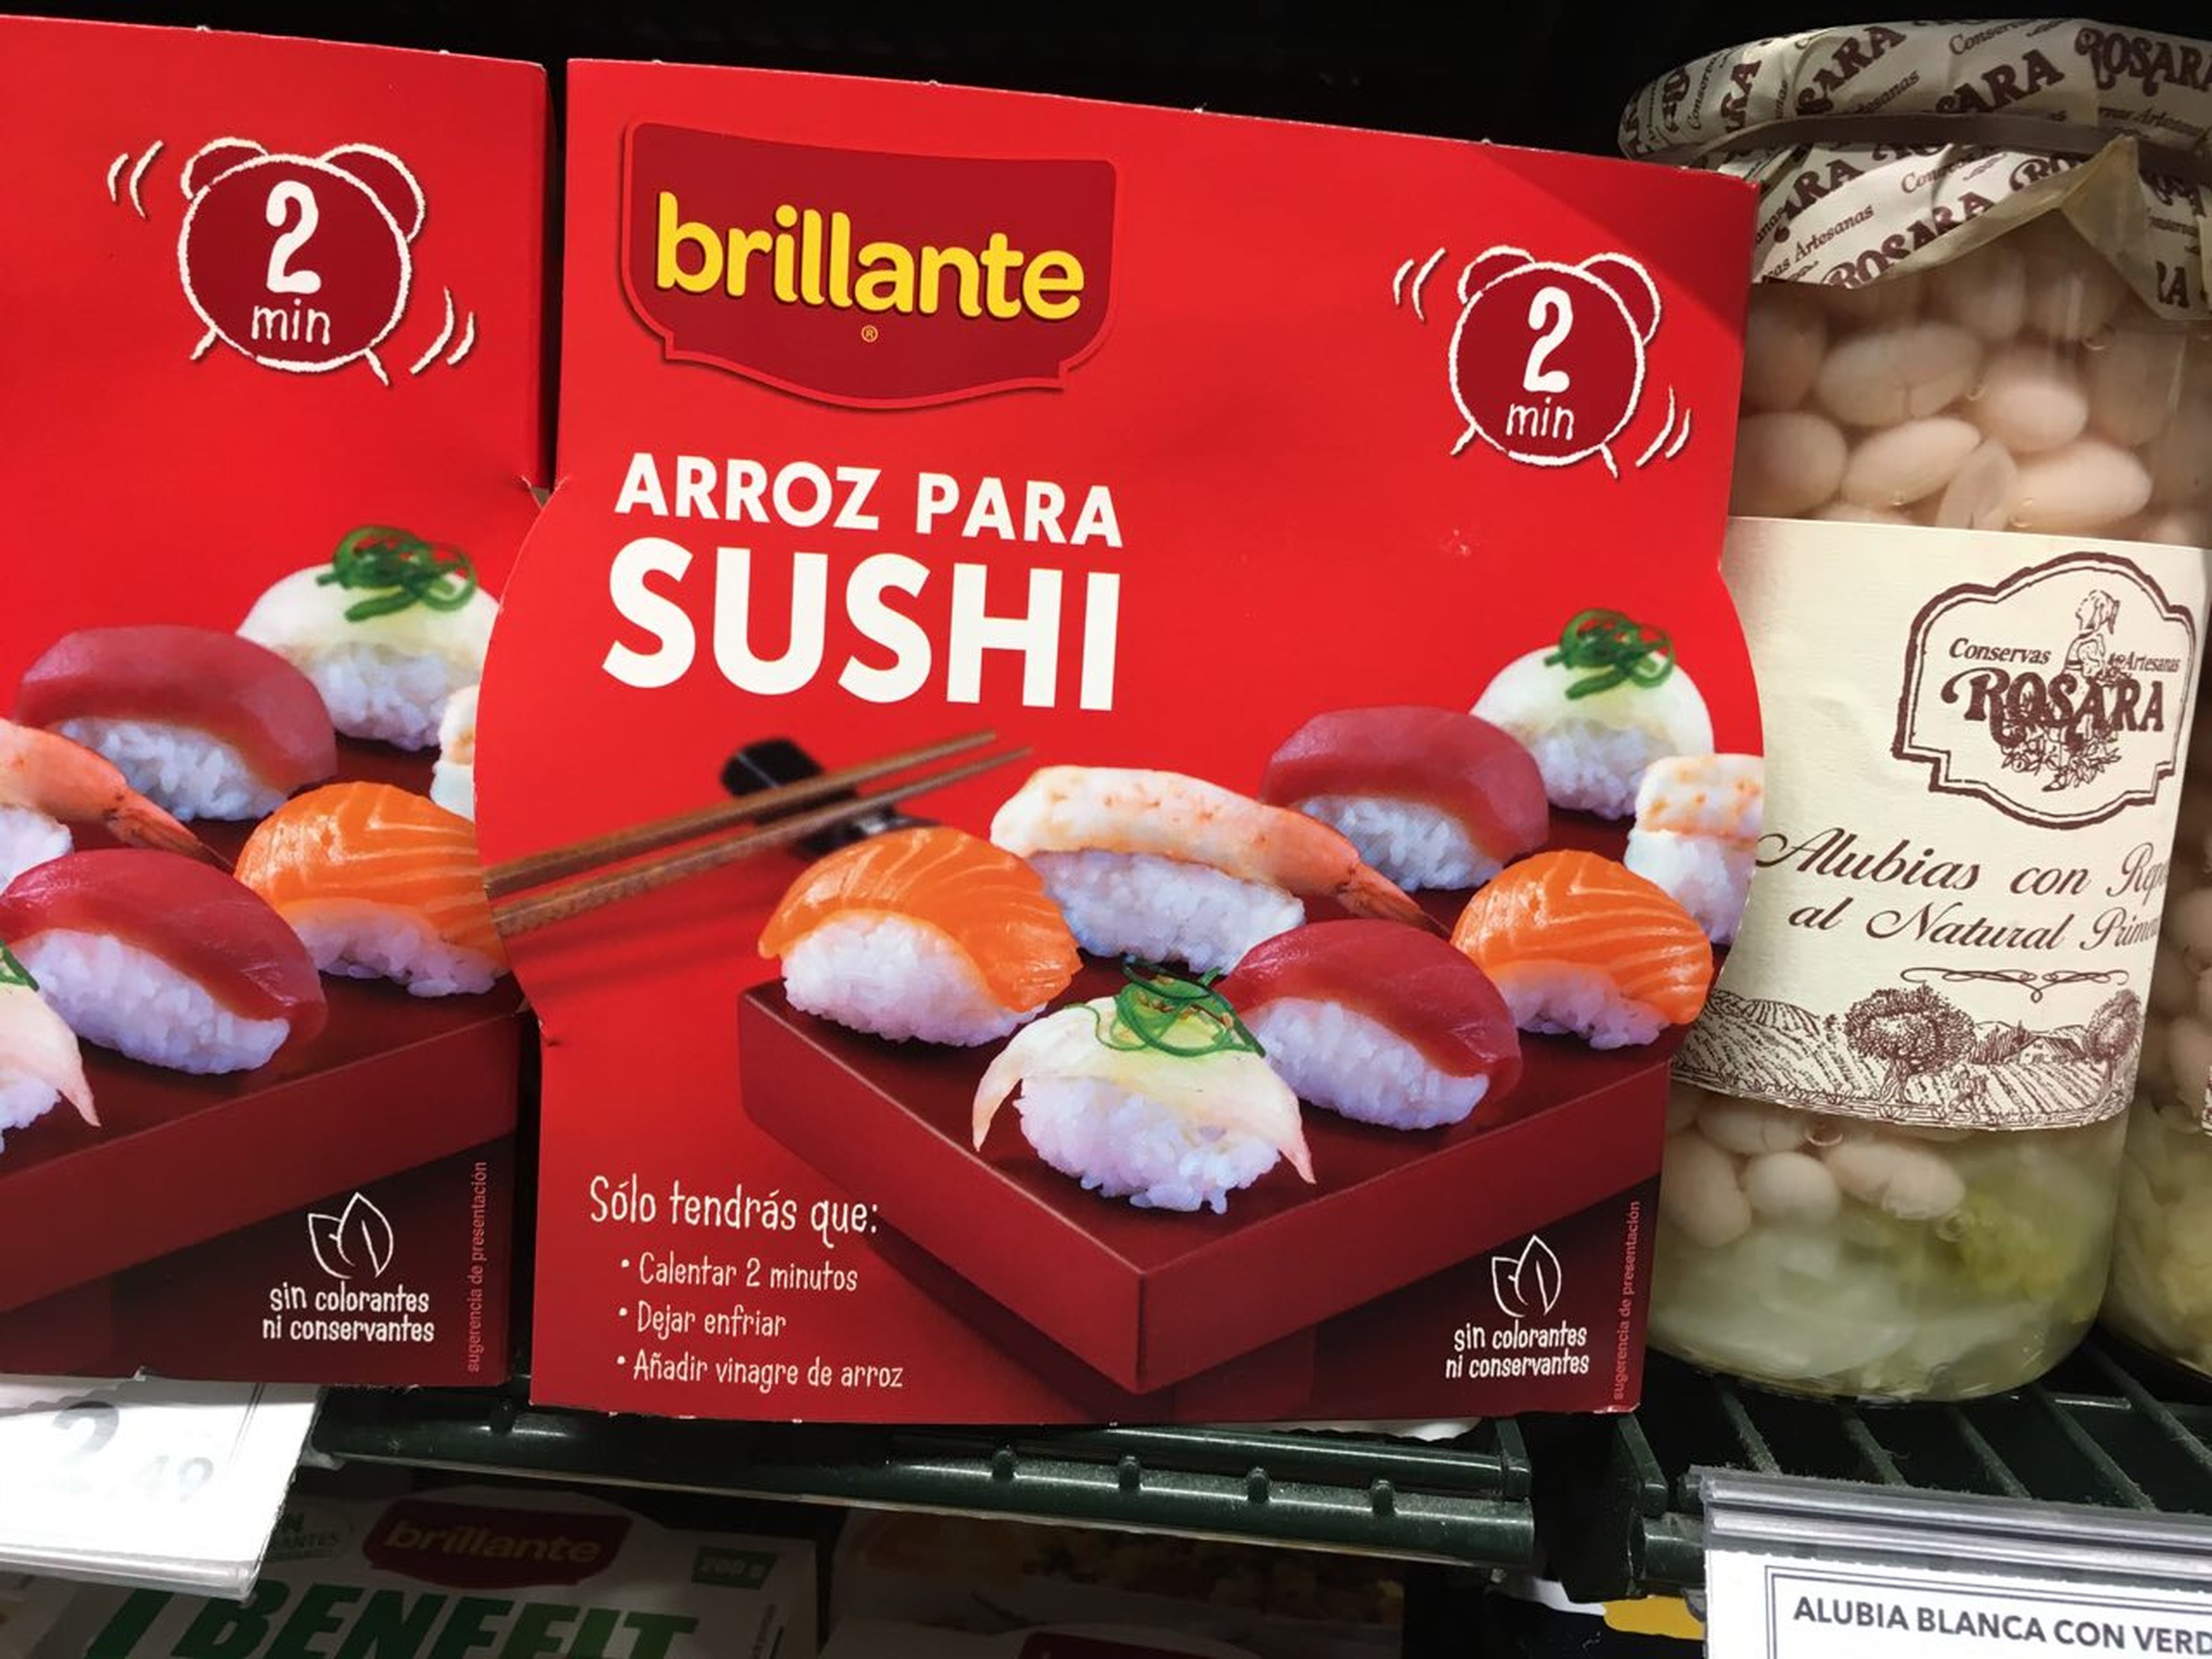 Arroz para sushi SR